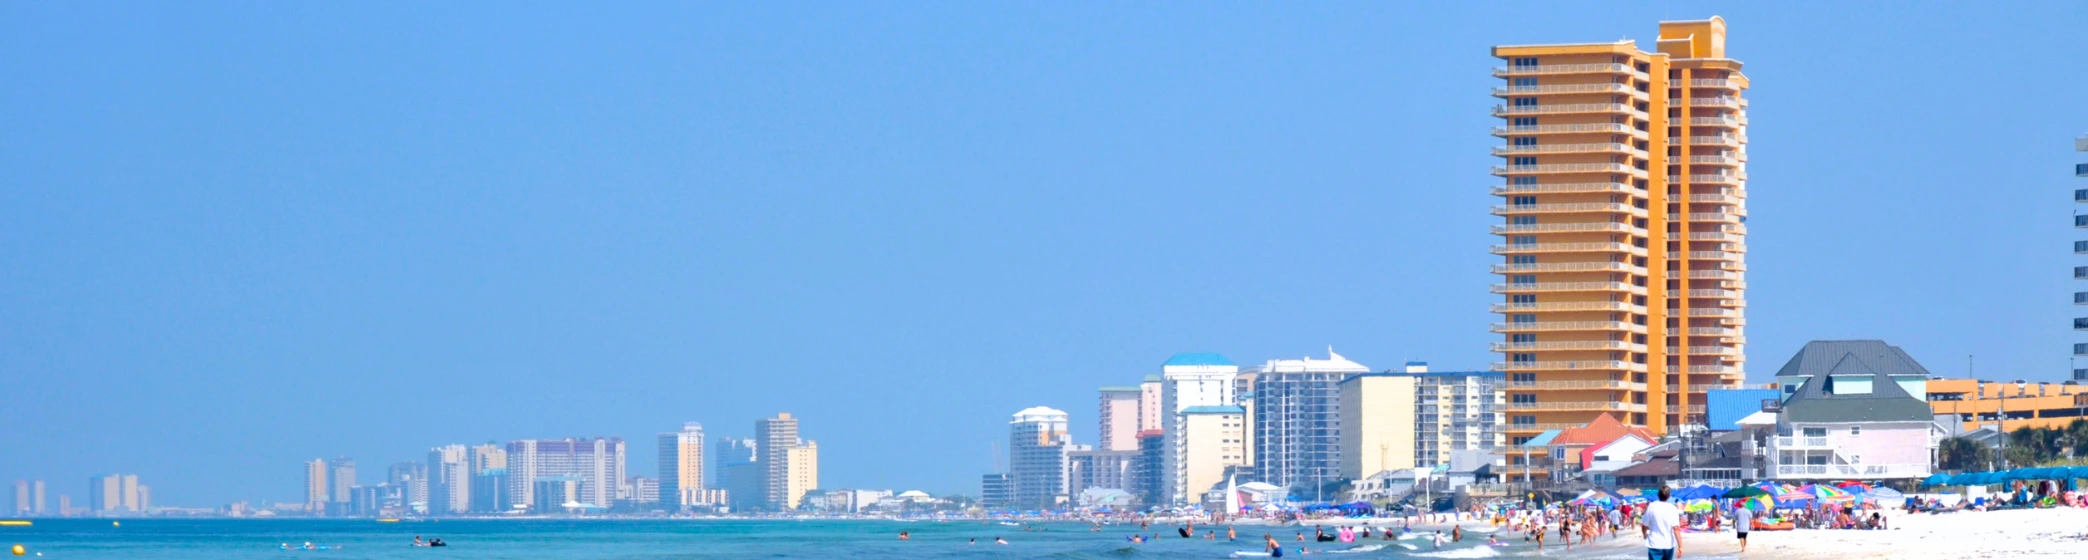 Panama City Beach เมือง Work and Travel USA ชายหาด ชายทะเล อากาศร้อน เหมือนเมืองไทย panda express waffle house taco bell mcdonald รัฐ Florida FL New Step newstep WAT ฝึกงาน ทำงาน ต่างประเทศ เที่ยว อเมริกา USA โครงการแลกเปลี่ยน วัฒนธรรม new step newstep